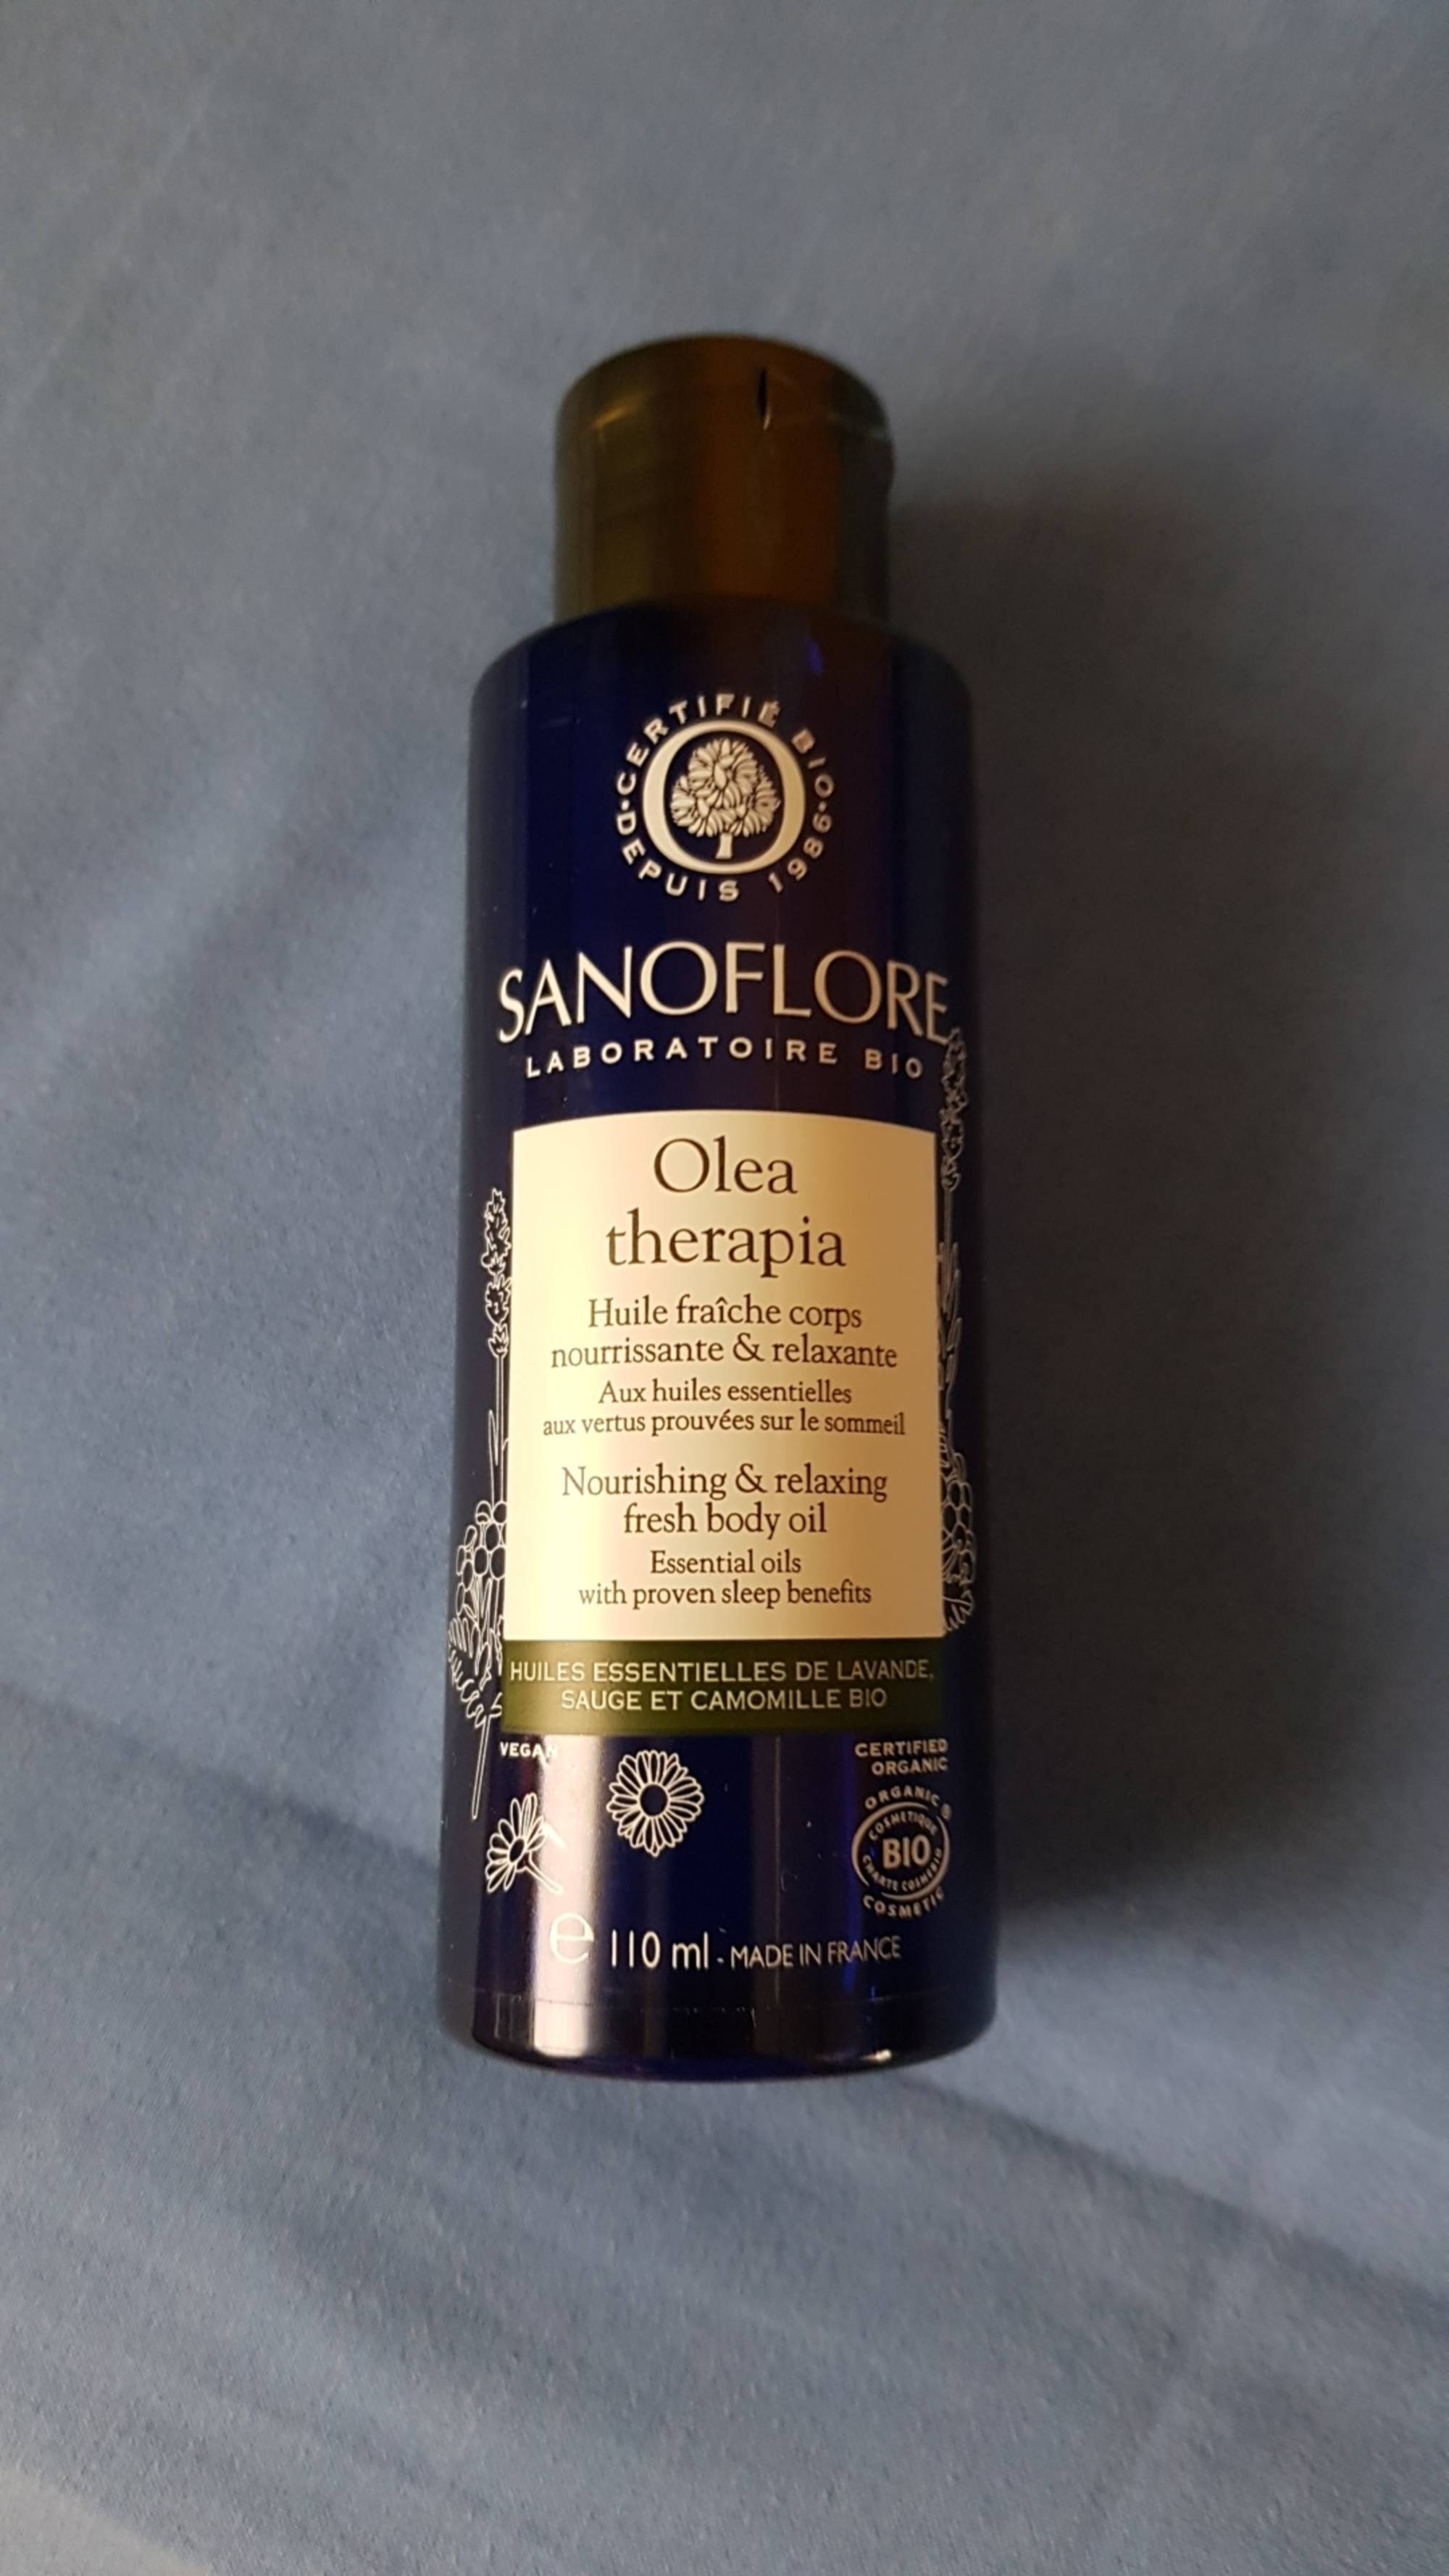 SANOFLORE - Olea therapia - Huile fraîche corps nourrissante & relaxante